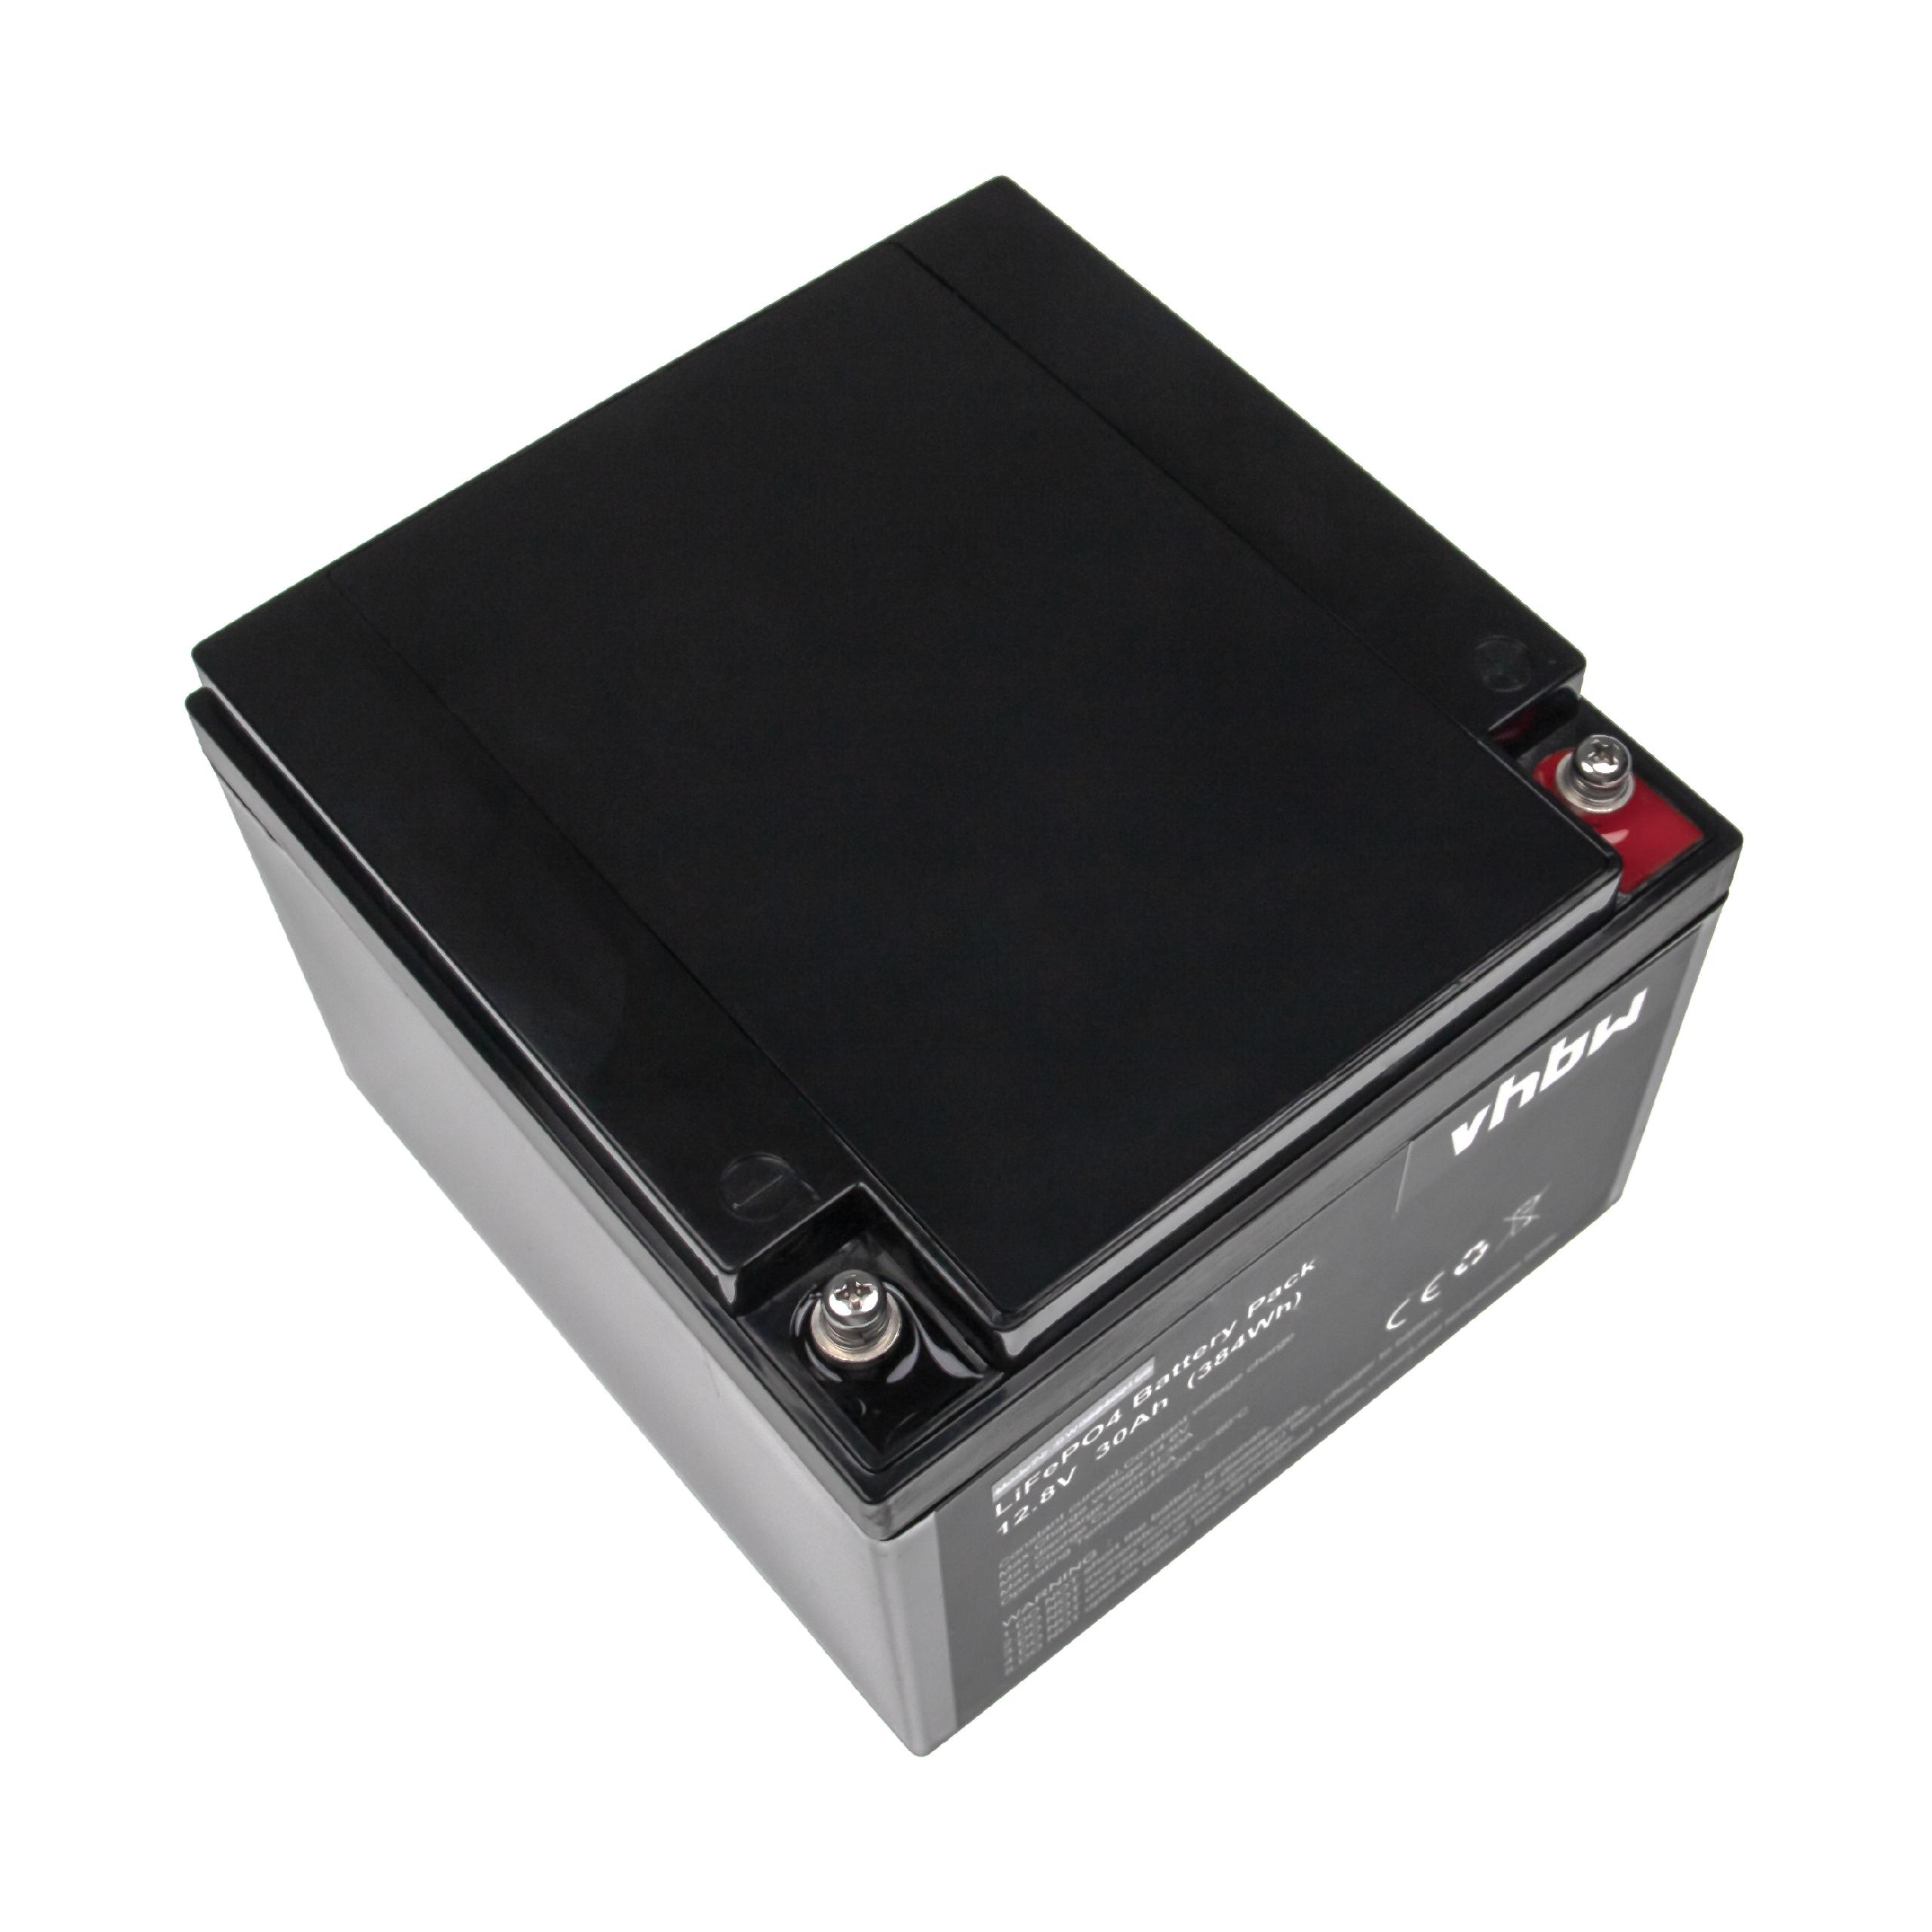 Bordbatterie Akku passend für Wohnmobil, Boot, Solaranlage - 30 Ah 12,8V LiFePO4, 30000mAh, schwarz